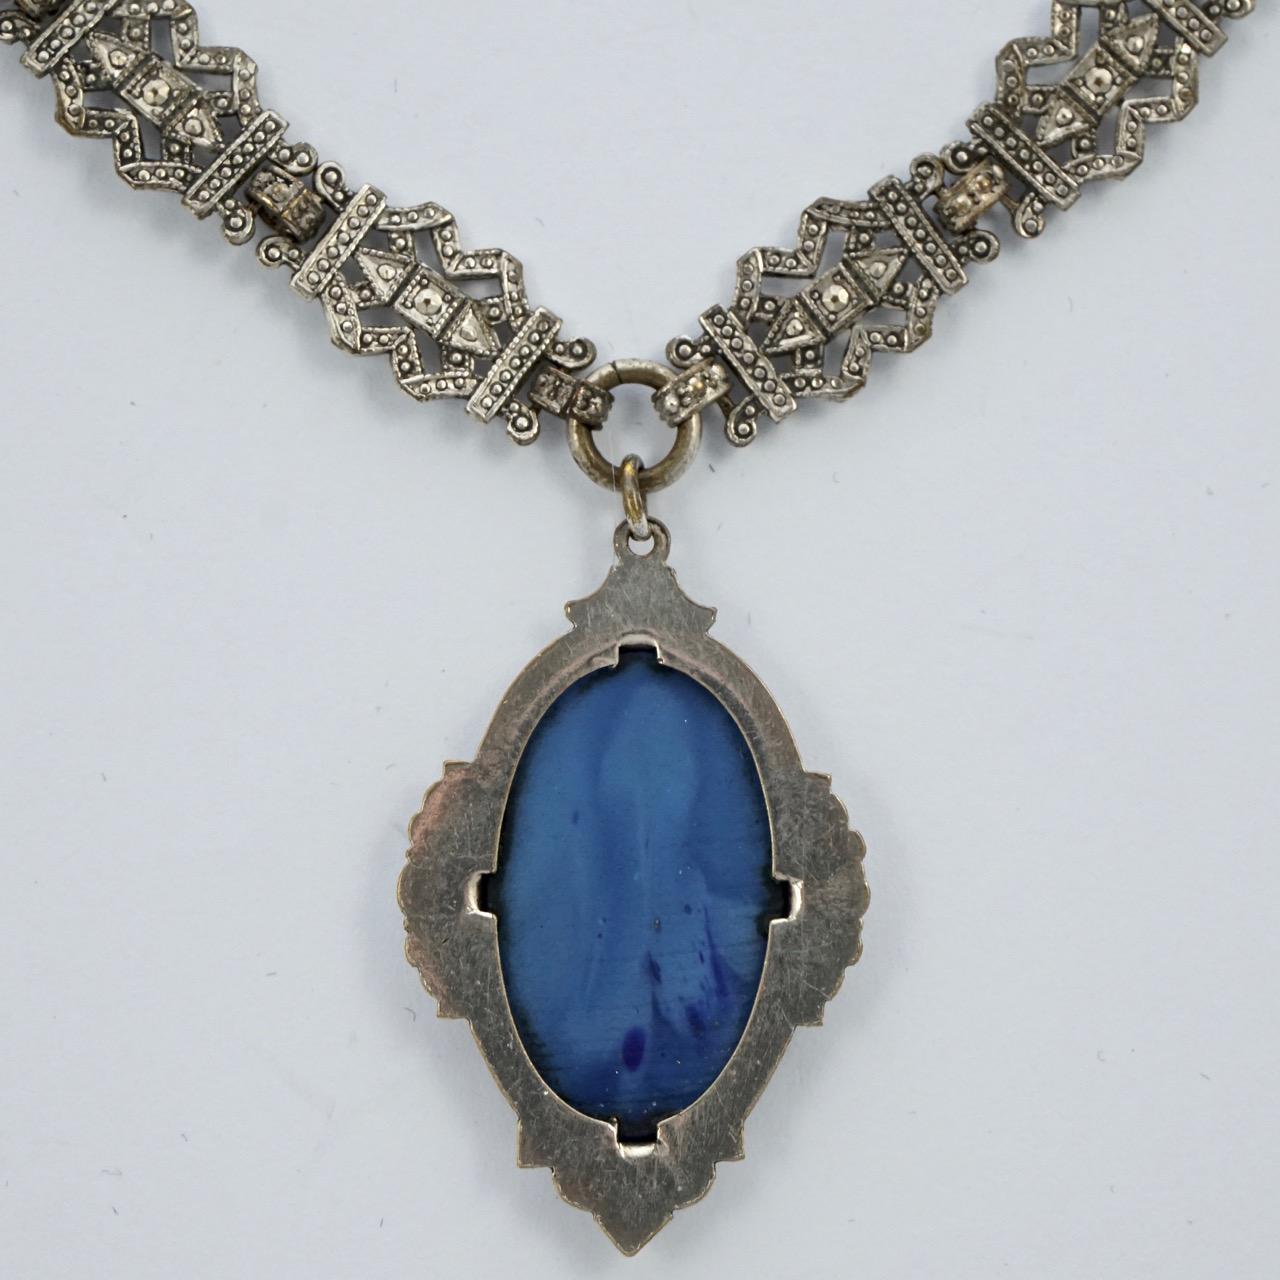 Oval Cut Art Deco Silver Plated Link Chain Sautoir Necklace with Lapis Lazuli Pendant